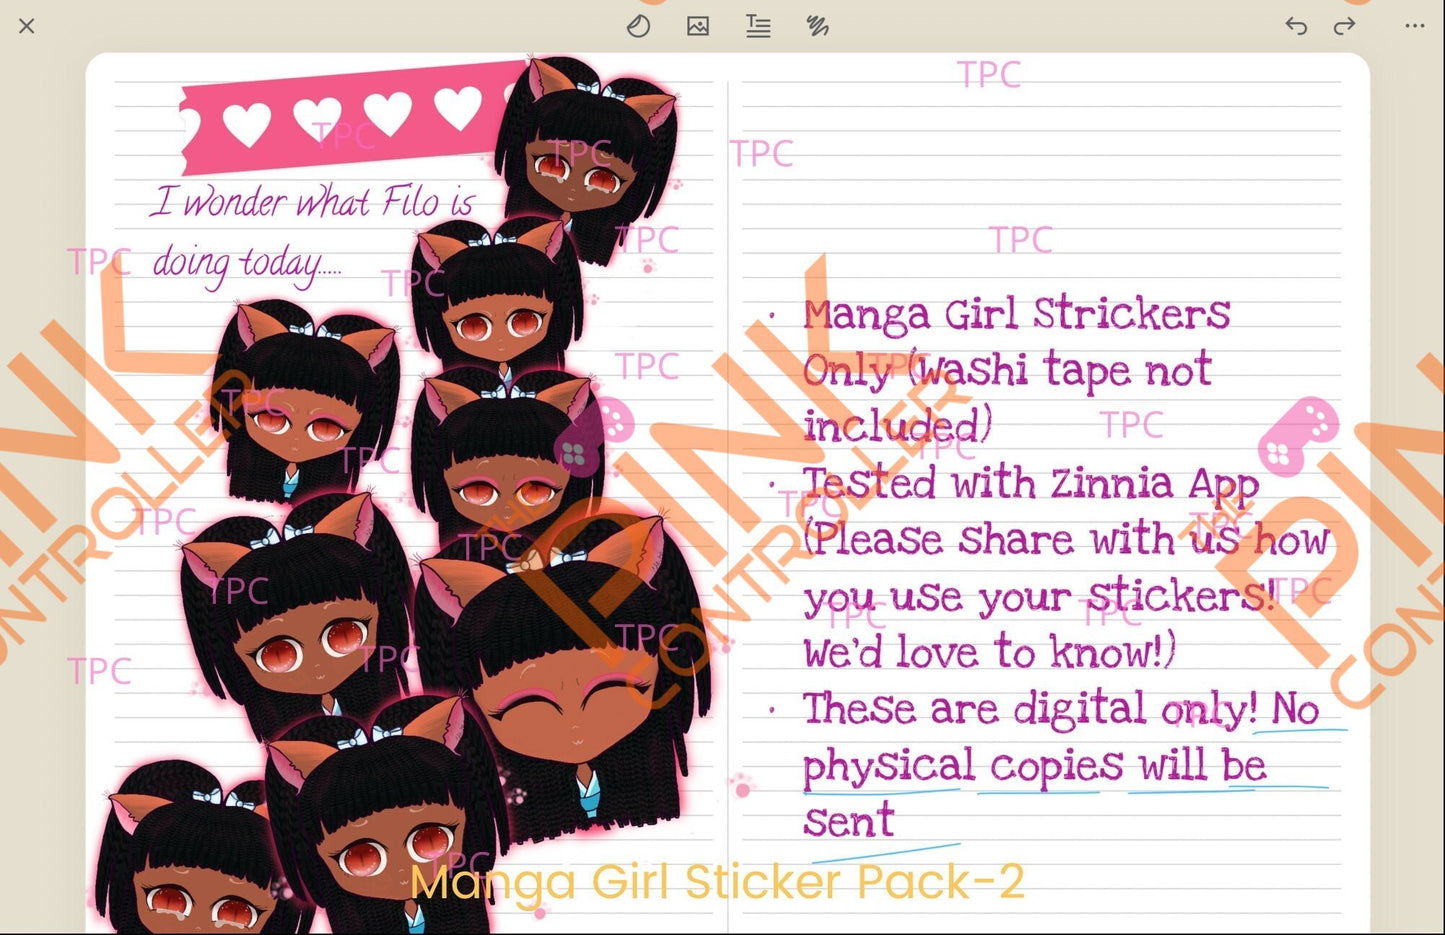 Manga Braids Girl Sticker Pack (Dark Brown Skin Tone)|Manga|Streamer|Twitch|BlackGirl Magic|Zinnia|DigitalSticker